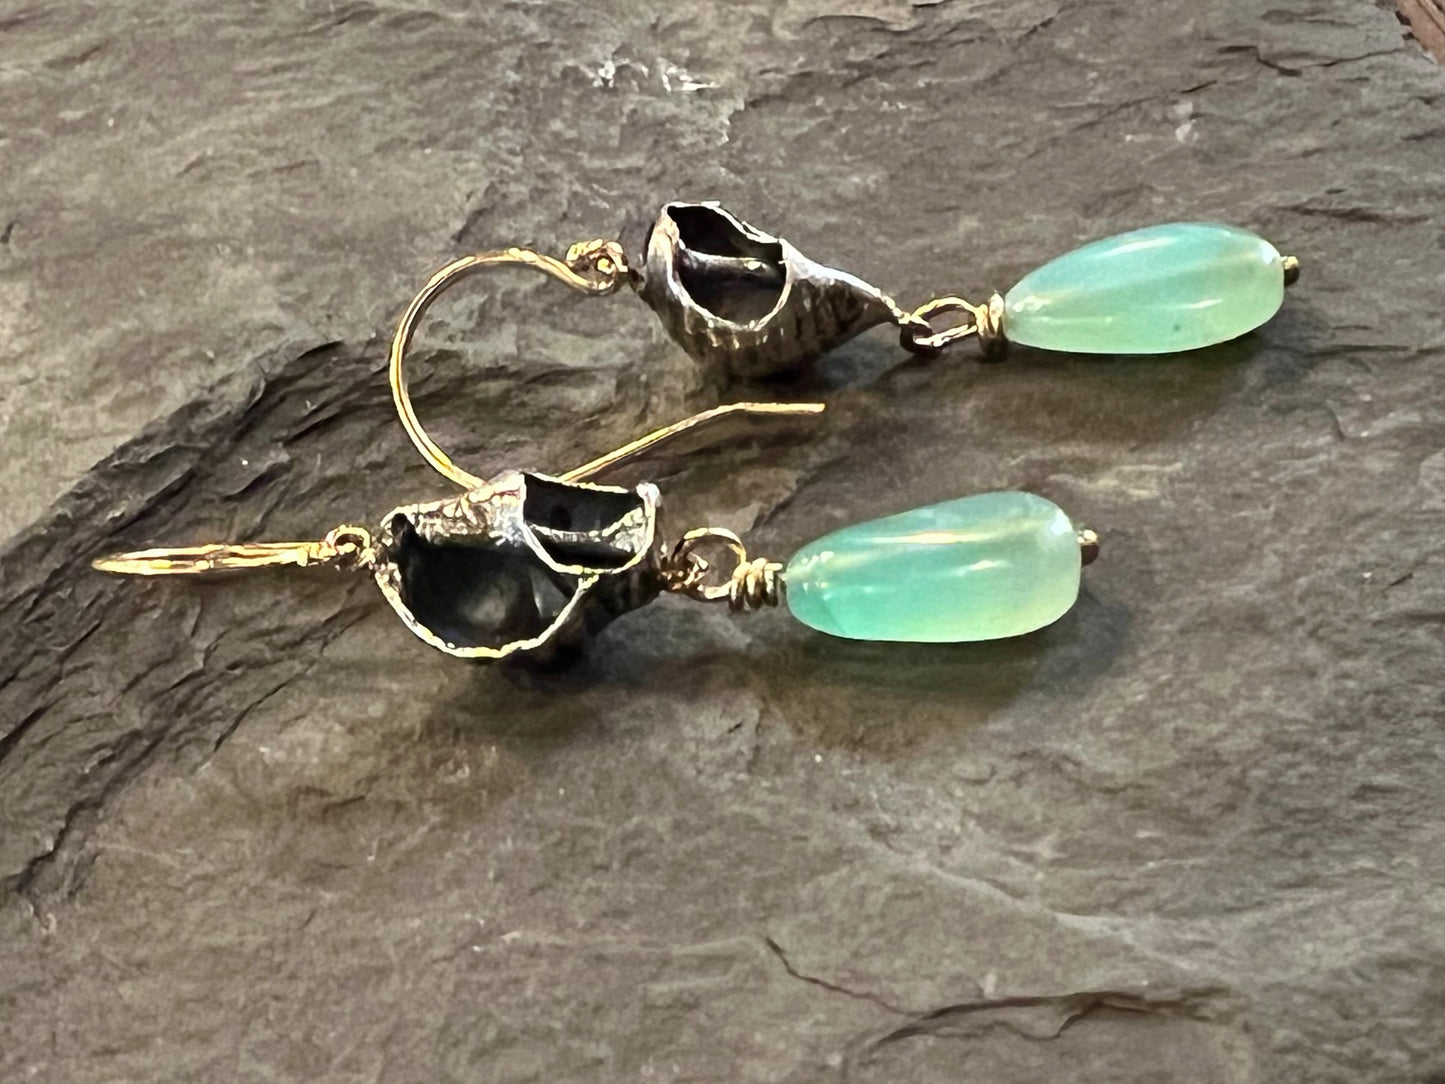 Ocean Inspired Oxidized Sterling & 14K Earrings with Peruvian Opal- Salt Series